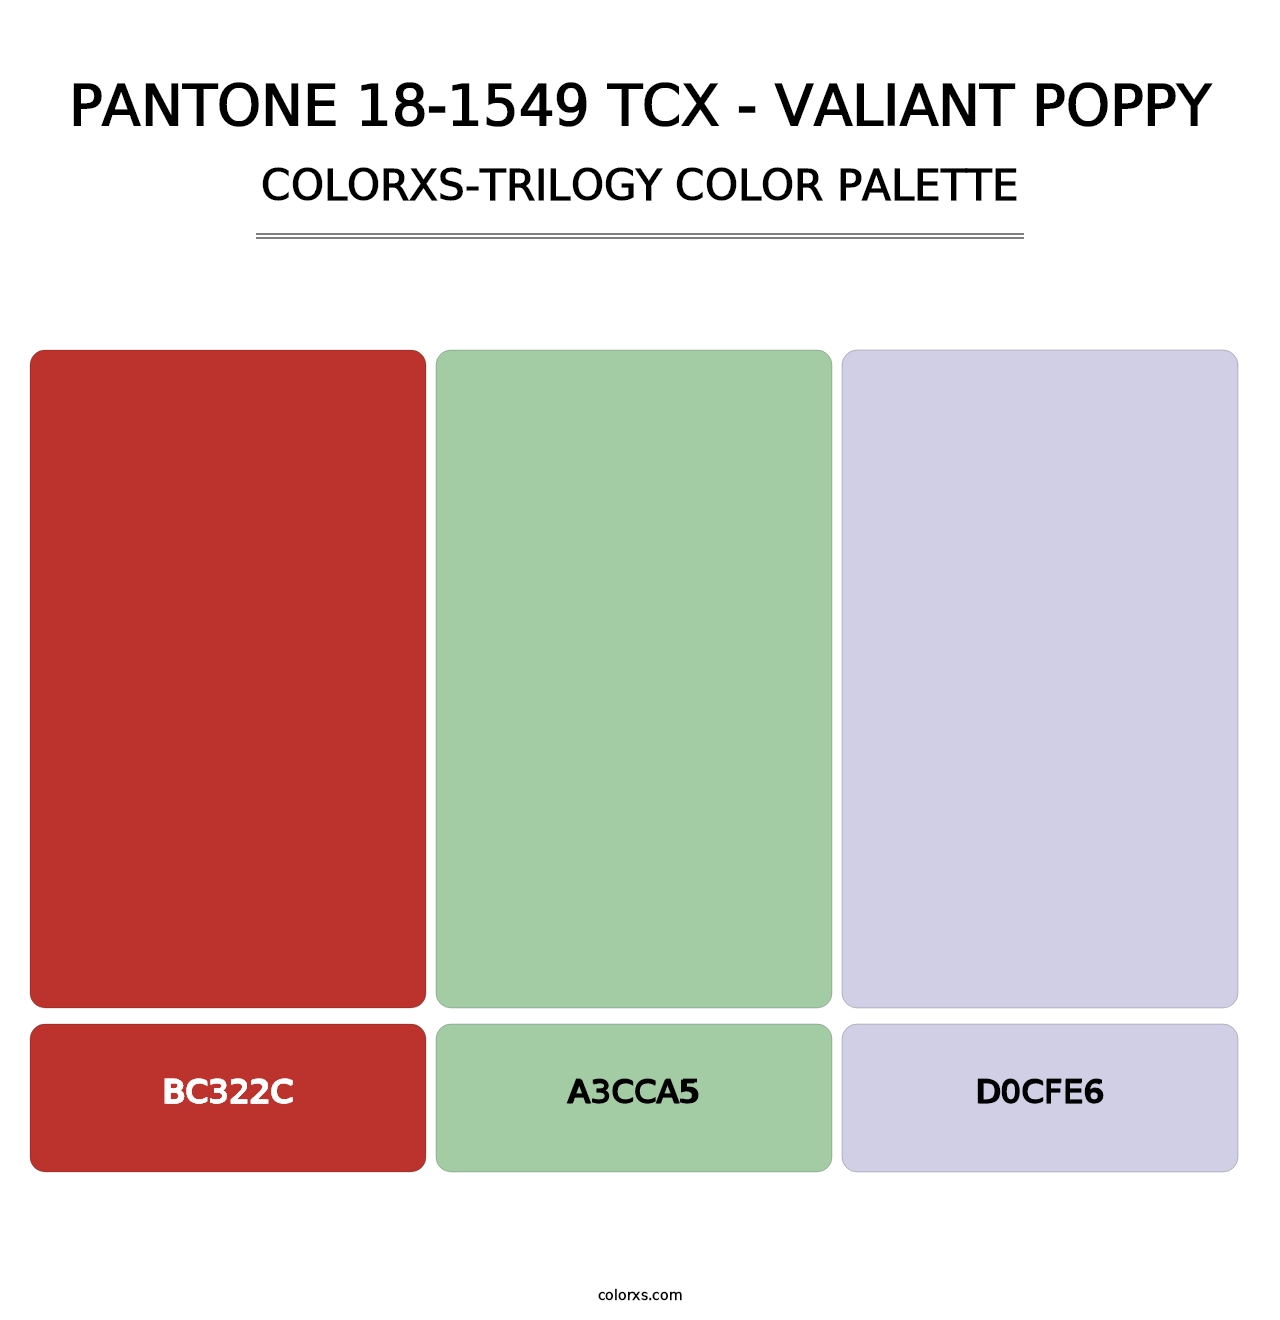 PANTONE 18-1549 TCX - Valiant Poppy - Colorxs Trilogy Palette